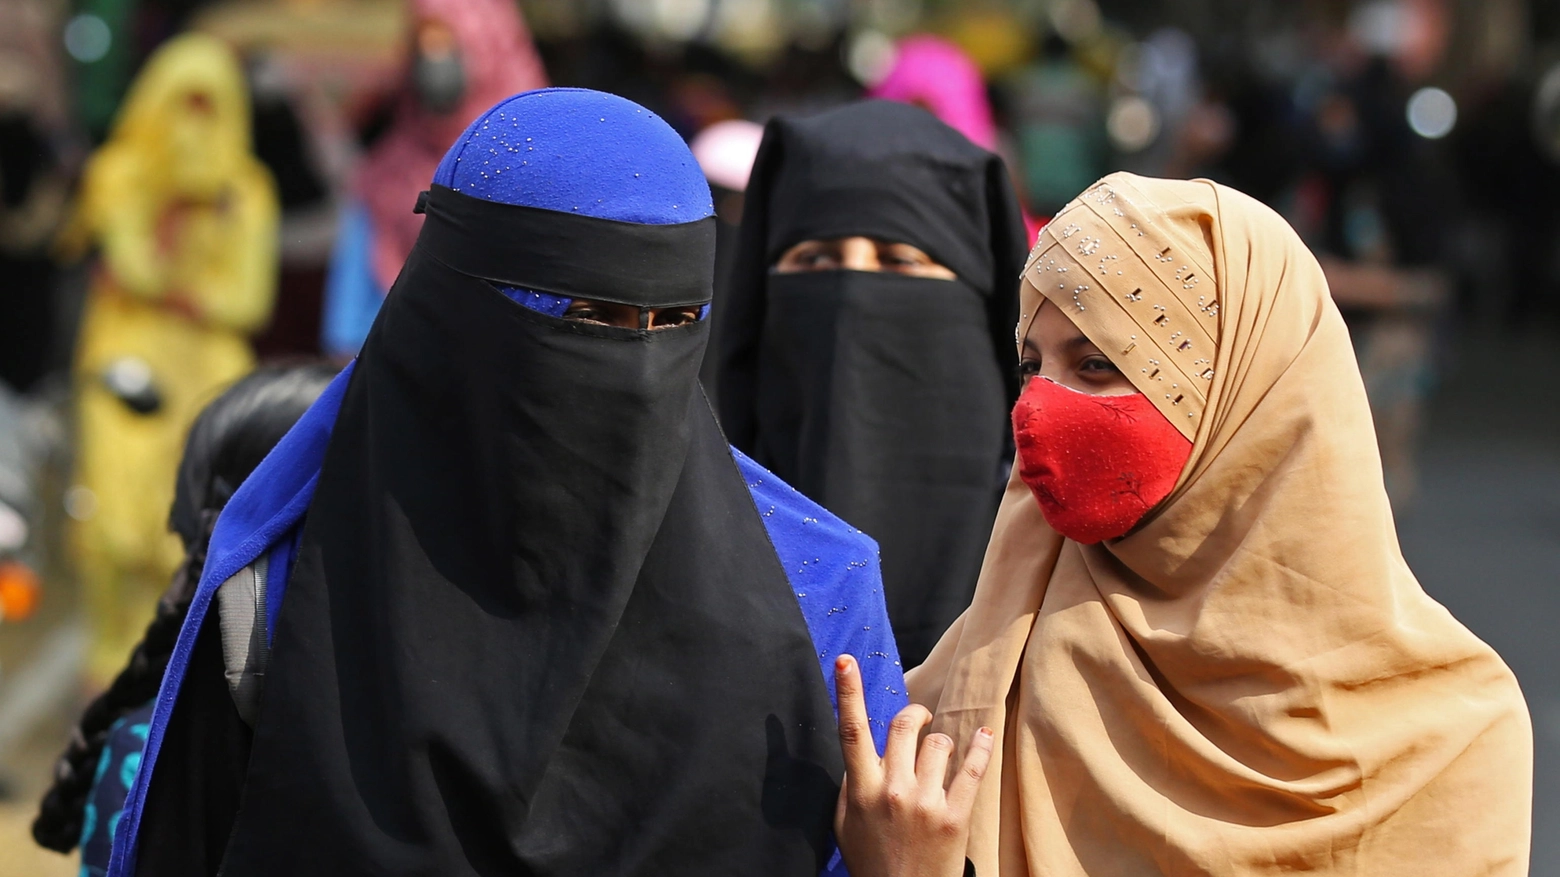 Donne musulmane indossano niqab e hijab (Ansa)